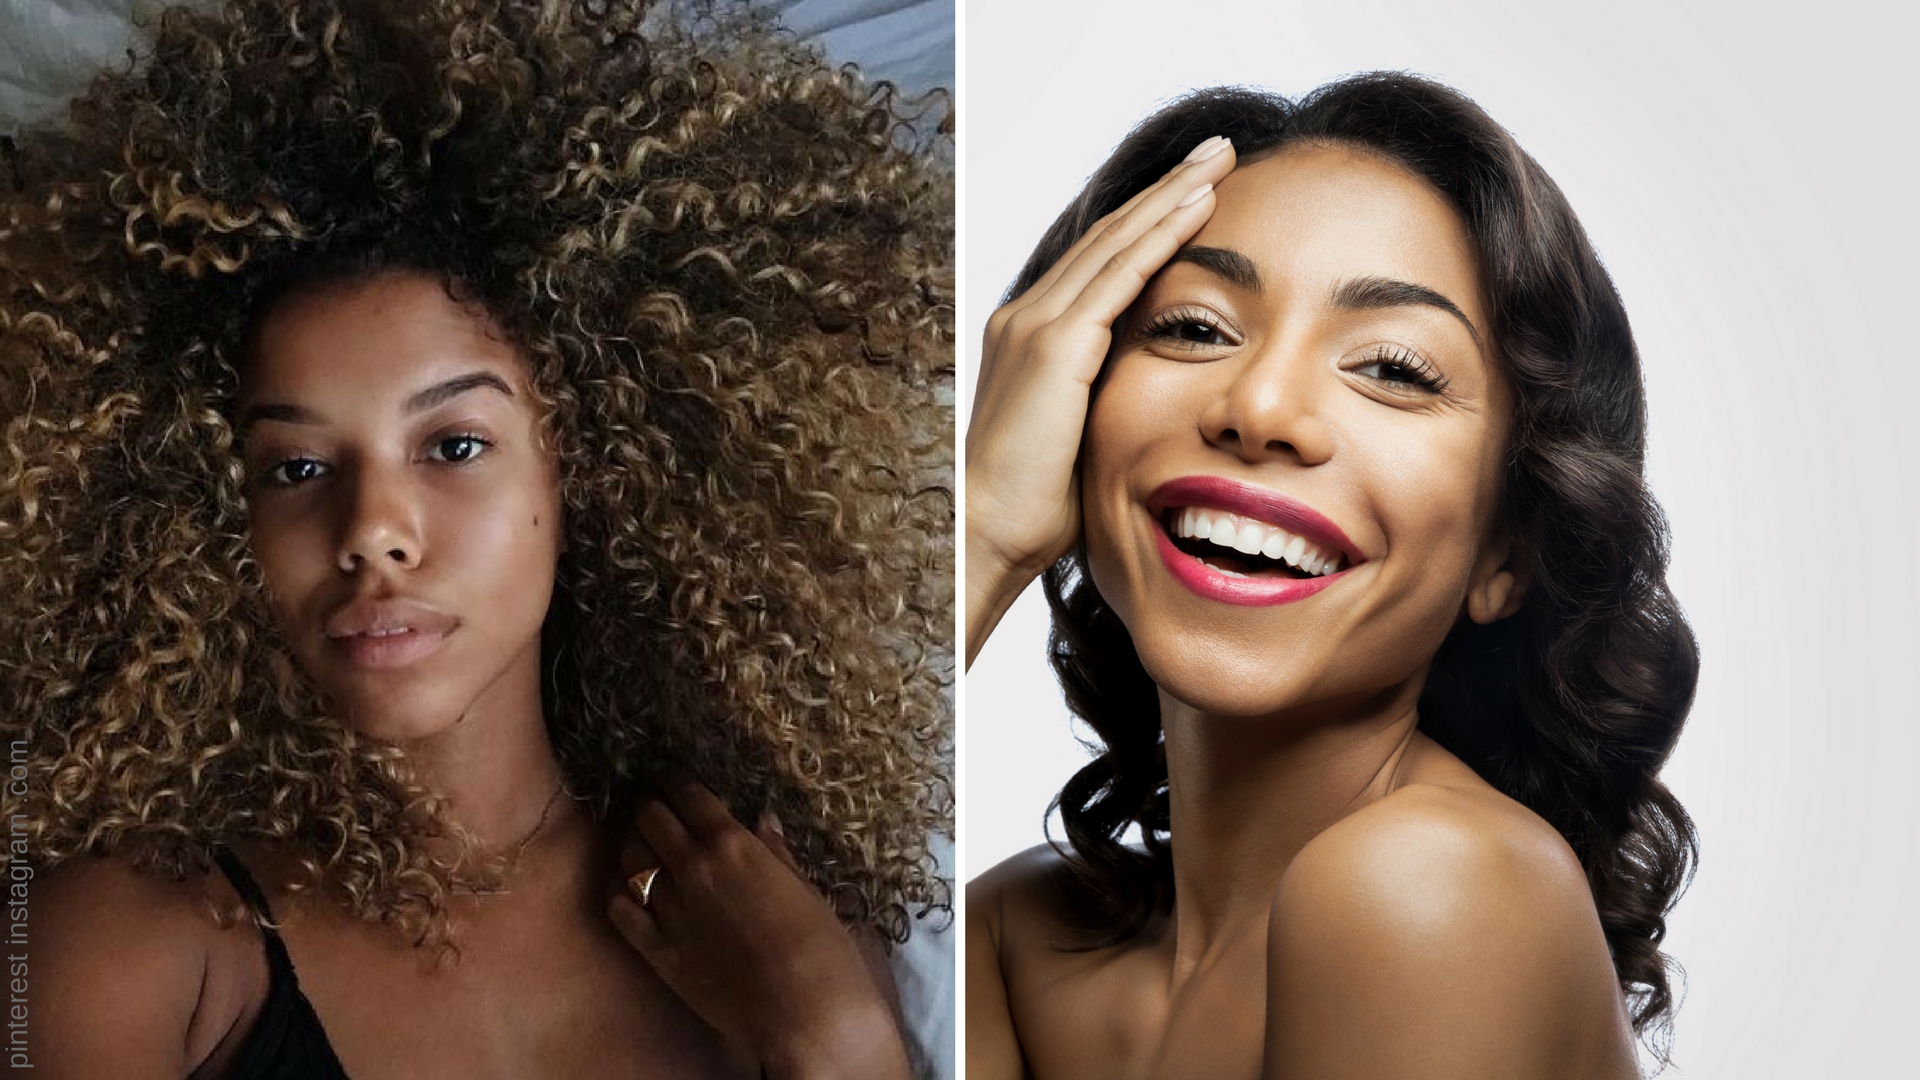 tendências de beleza: maquiagem natural tendência beleza 2018